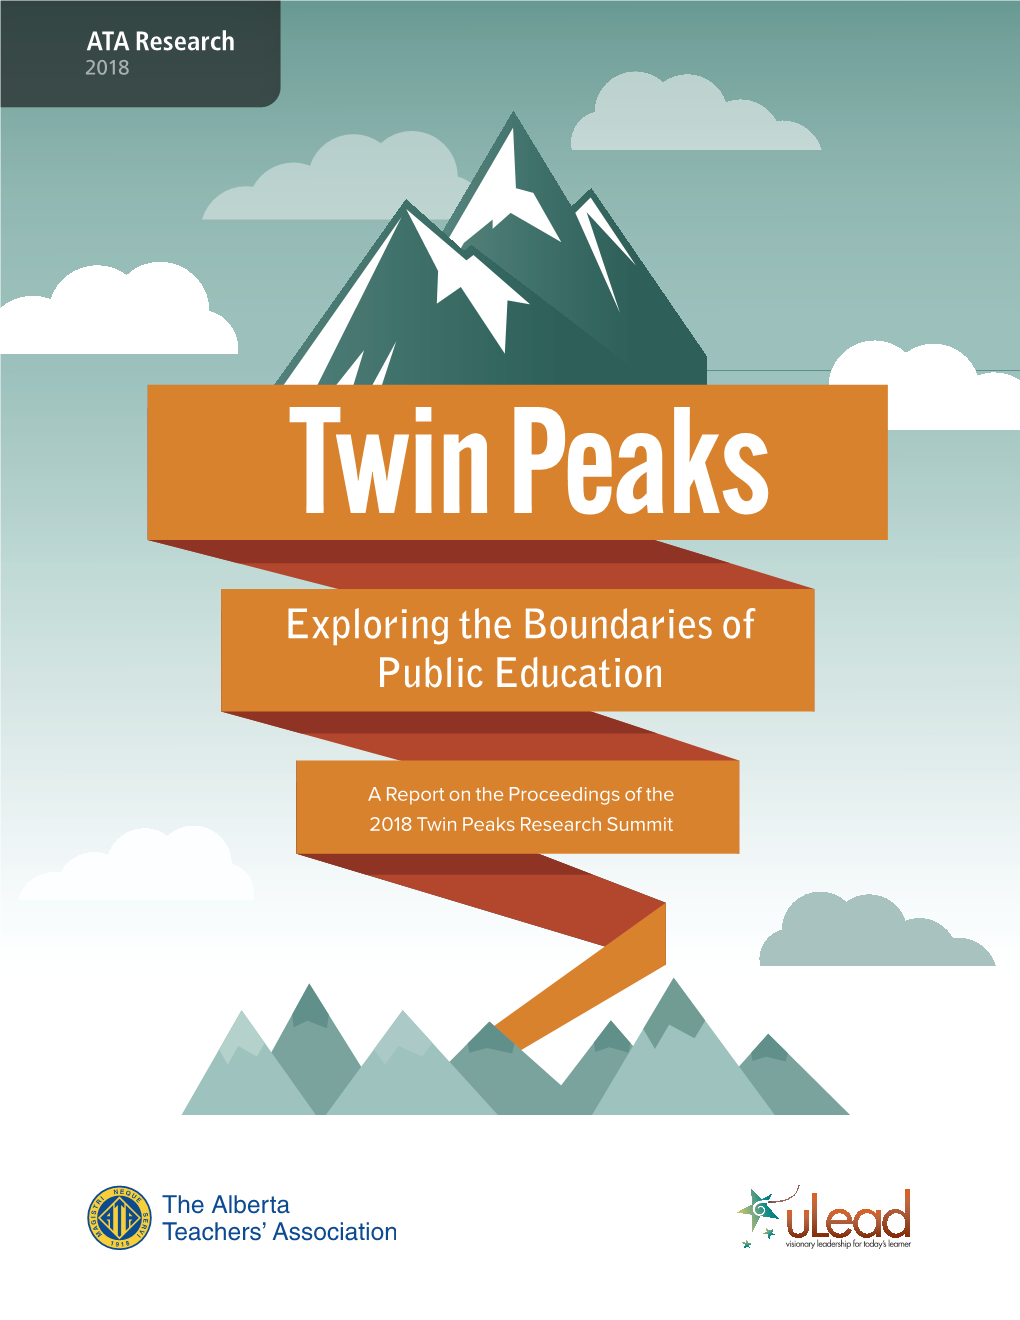 Twin Peaks—Exploring the Boundaries of Public Education